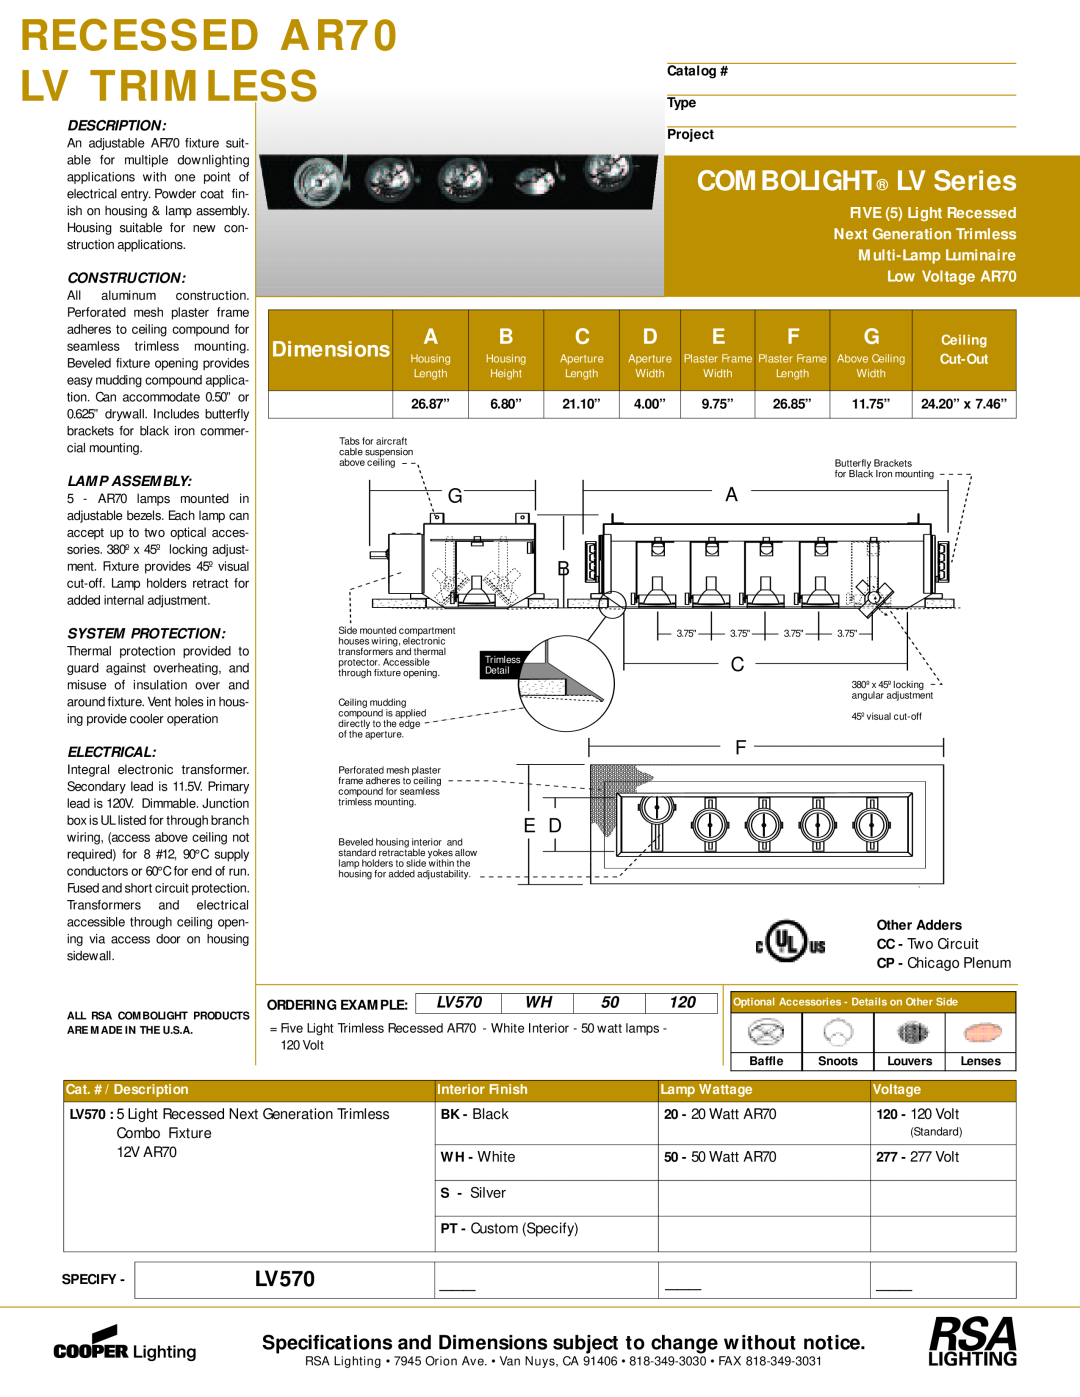 Cooper Lighting LV570 dimensions RECESSED AR70, Lv Trimless, COMBOLIGHT LV Series, Dimensions, Low Voltage AR70, Catalog # 